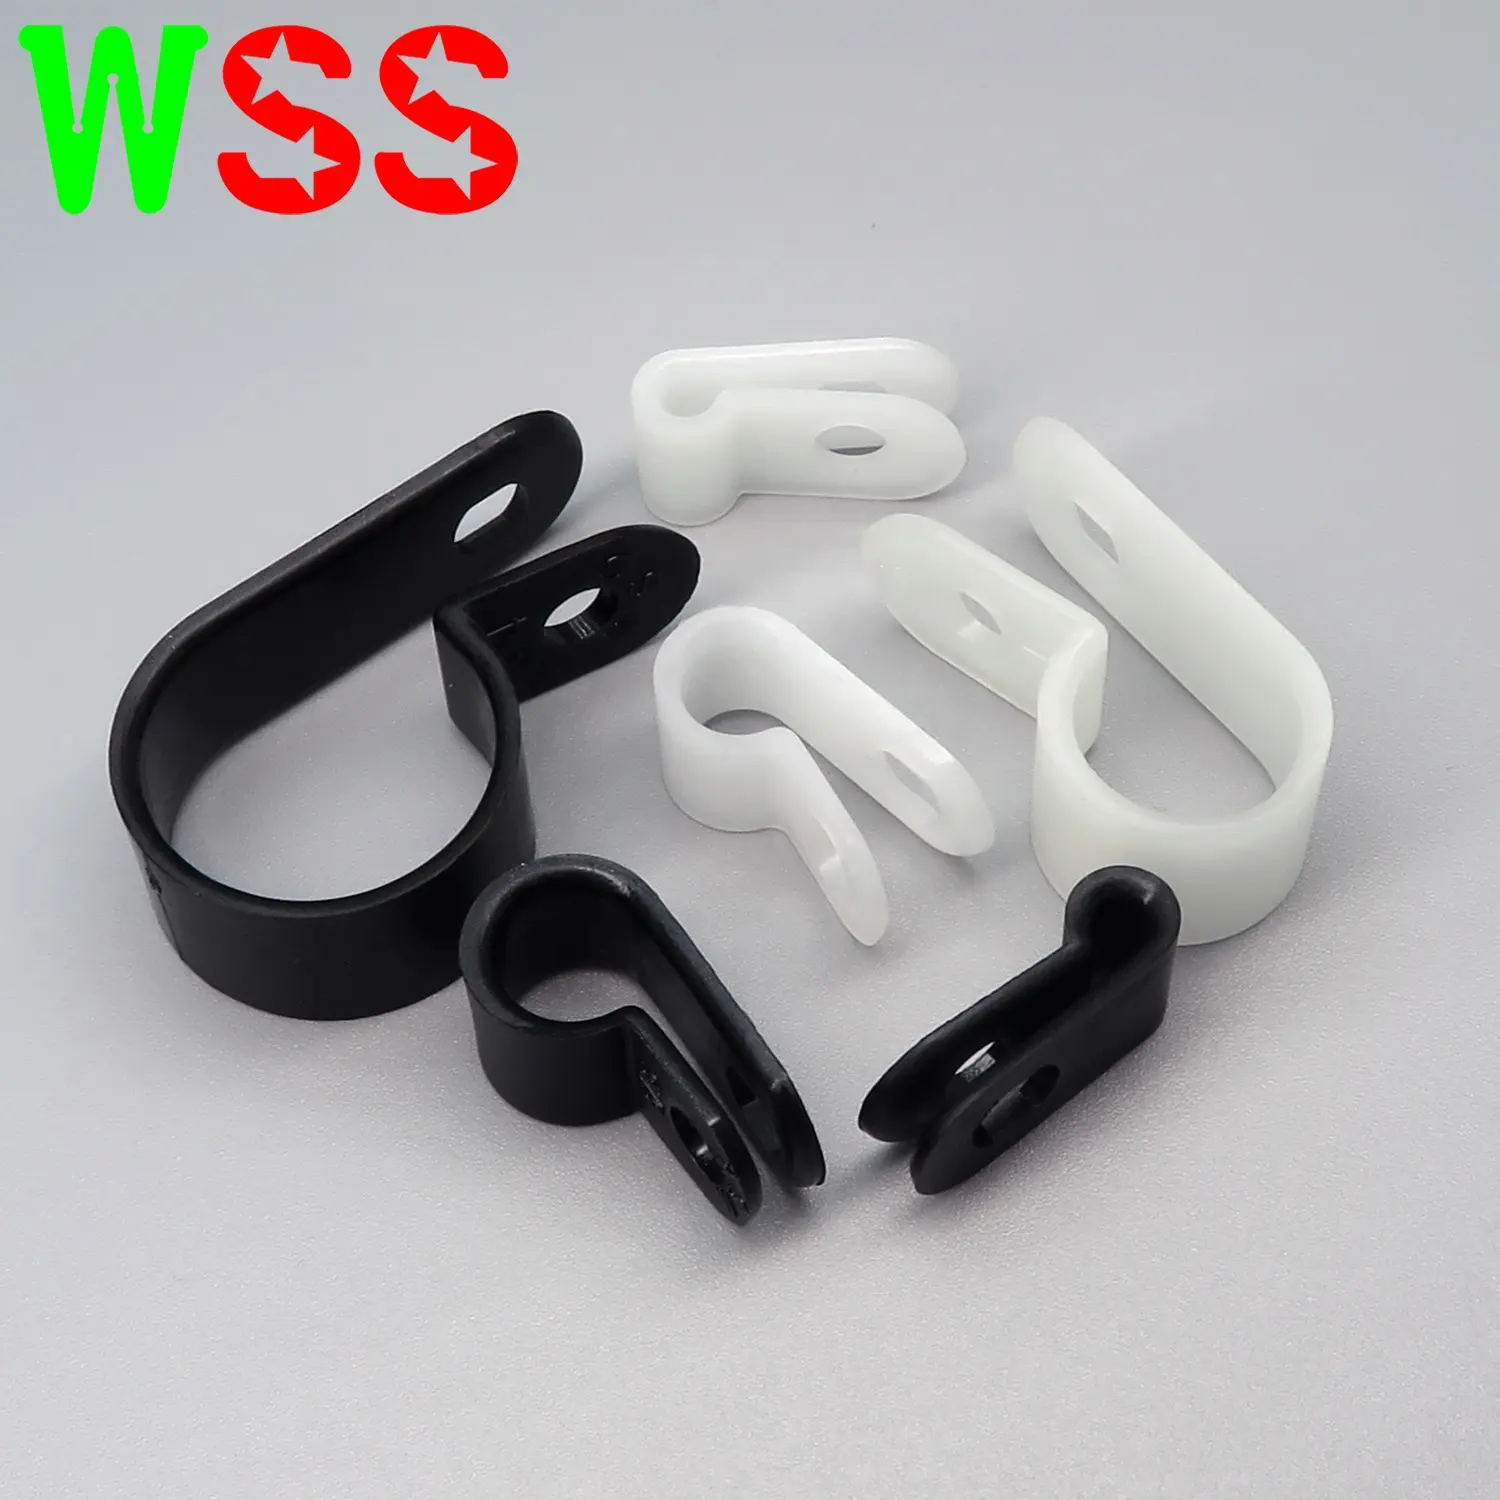 Abrazadera de Cable tipo R, clip de plástico de nailon ajustable, soporte de Cable redondo